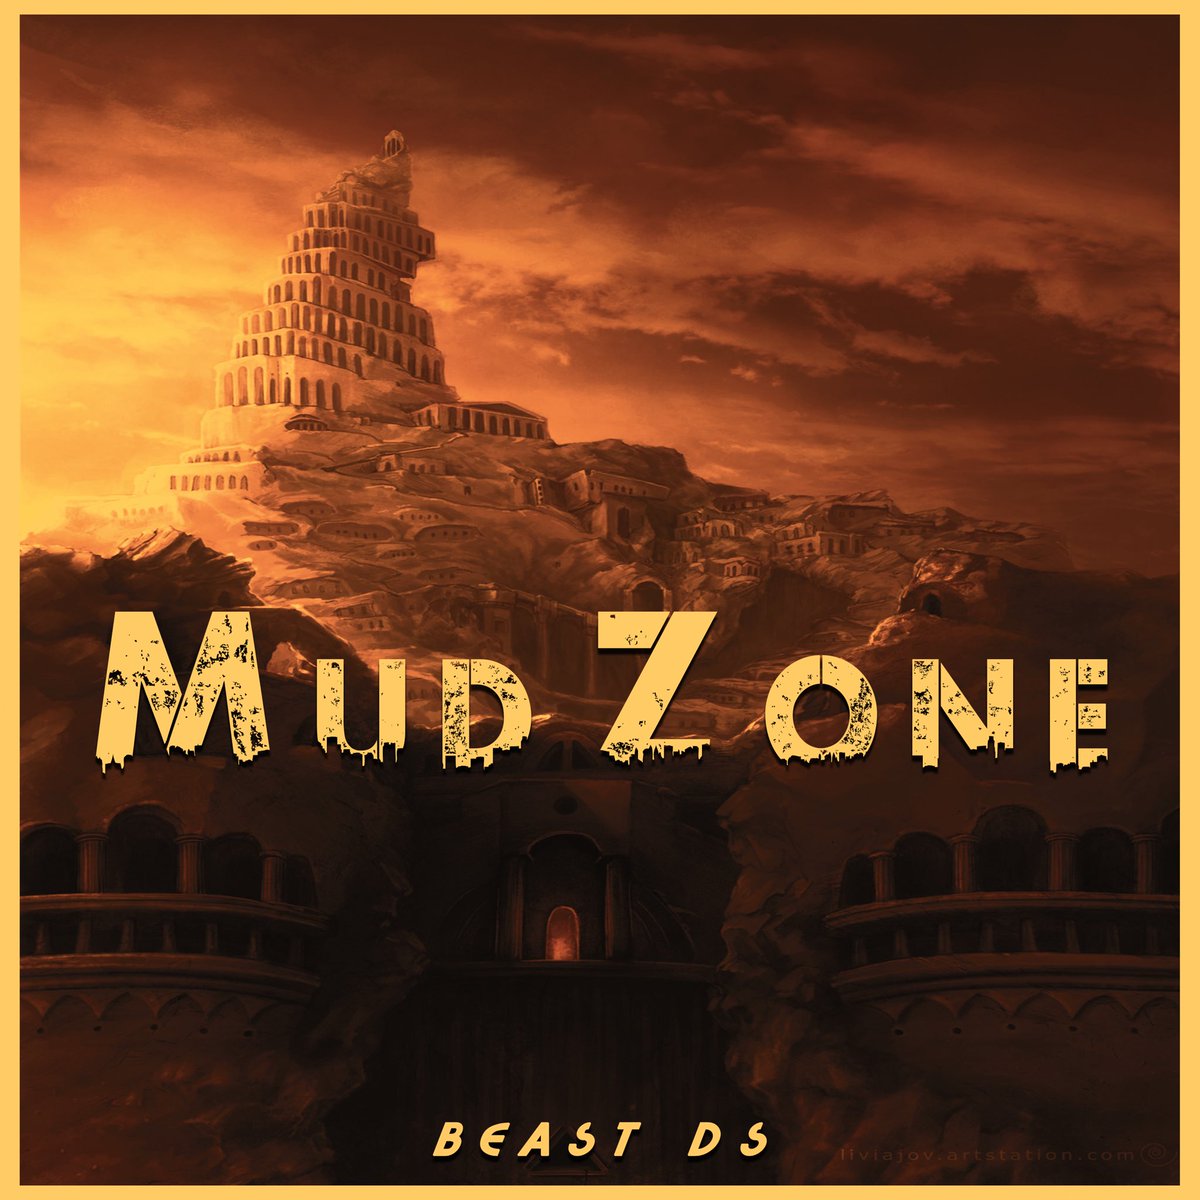 My New Album called “MUD ZONE” Dropping April 2019 🔥🔥 #ttmg #beastds #toptenmusicgroup #newmusic #detroitmusic #detroitrapper #nyc #djs #tourdjs #HipHopMusic #audioengineer